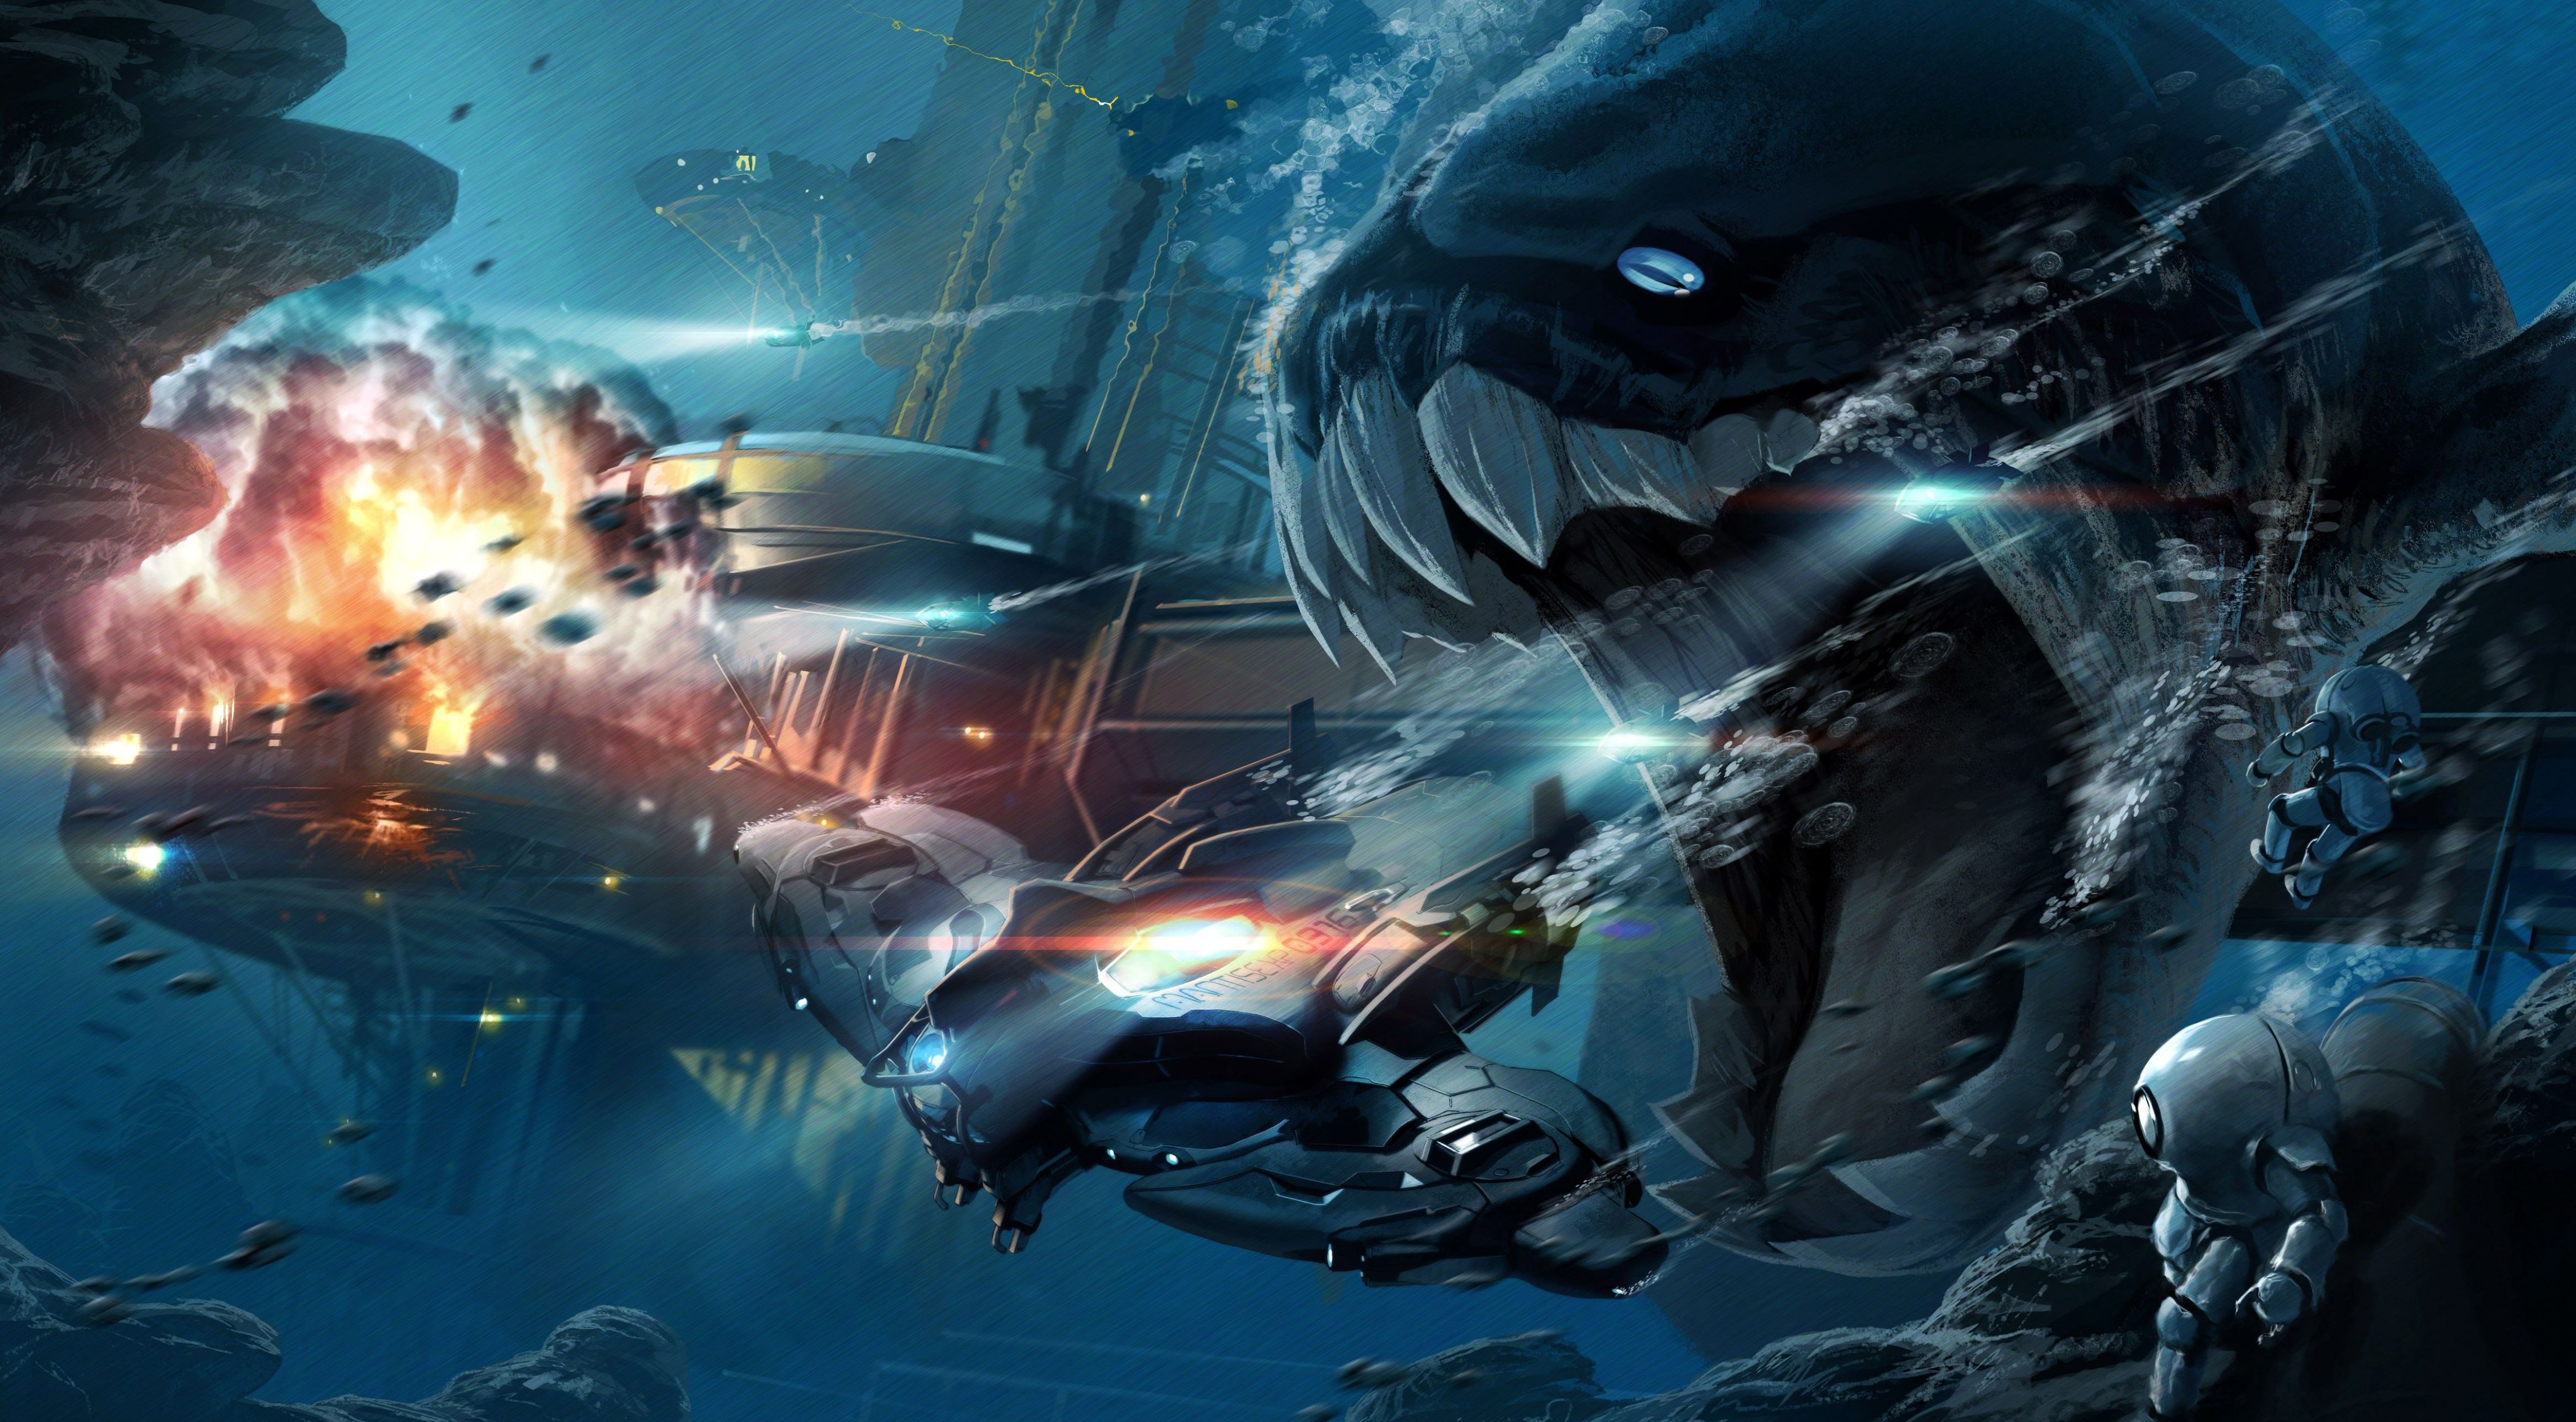 Digital Digital Art Artwork Fantasy Art Water Sea Underwater Deep Sea Sea Monsters Explosion Surreal 4800x2650